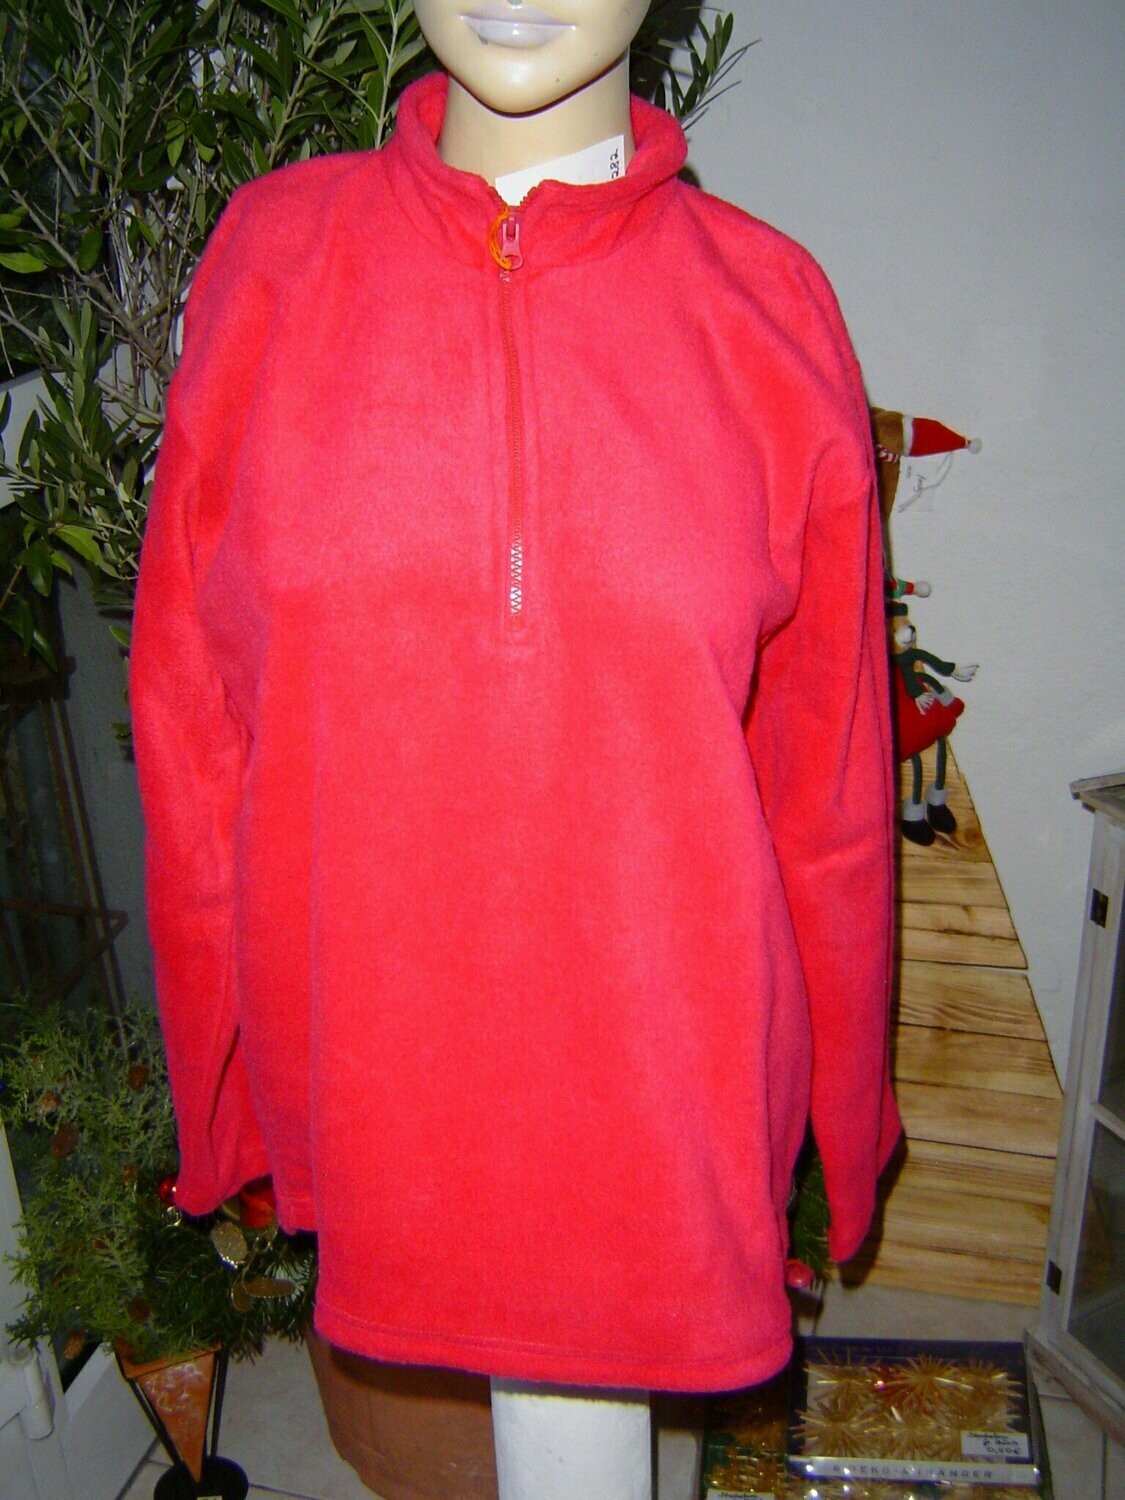 Damen Fleecepullover Gr. 40, 42 pink